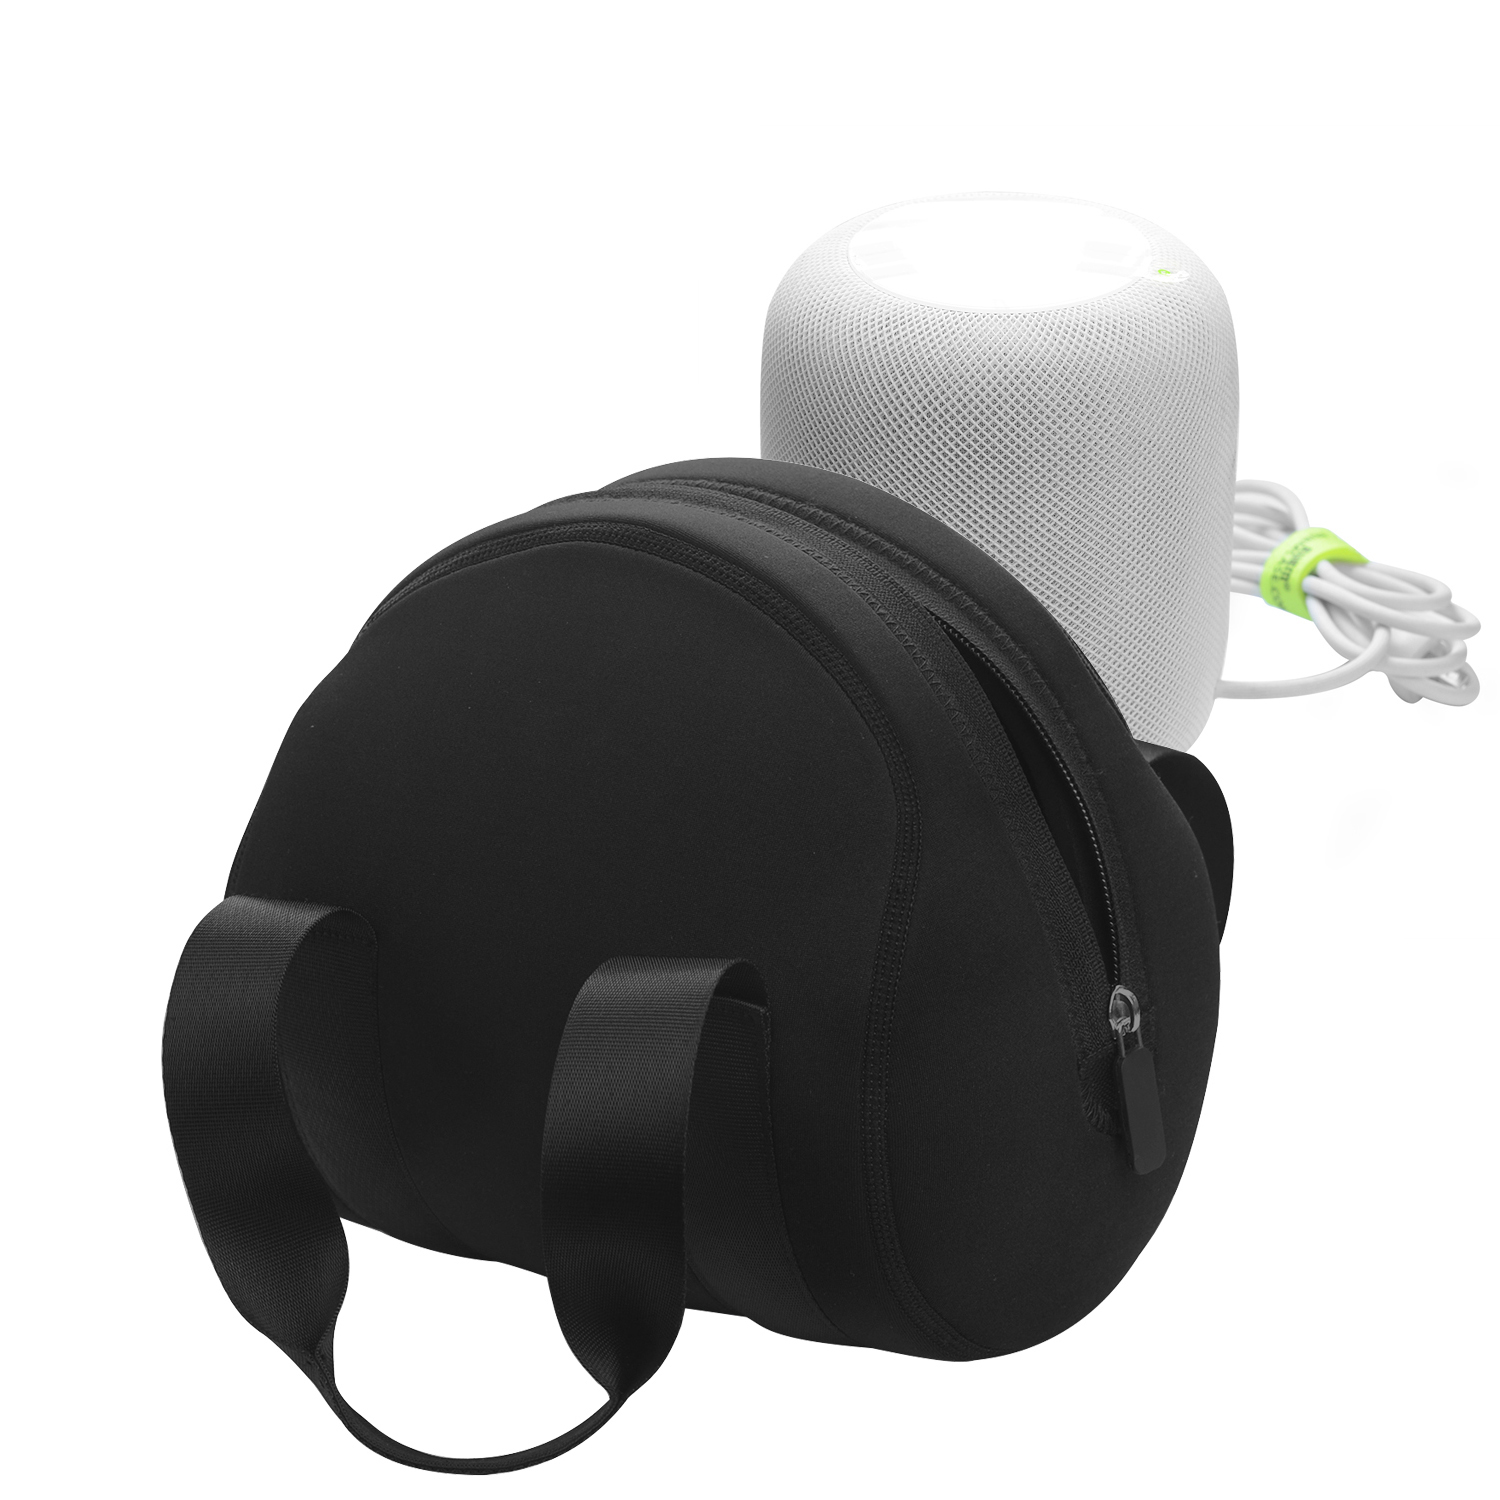 Bakeey-Speaker-Storage-Bag-Protective-Cover-Handbag-Portable-Outdoor-Travel-Spots-Soft-Carrying-Bag--1830329-2